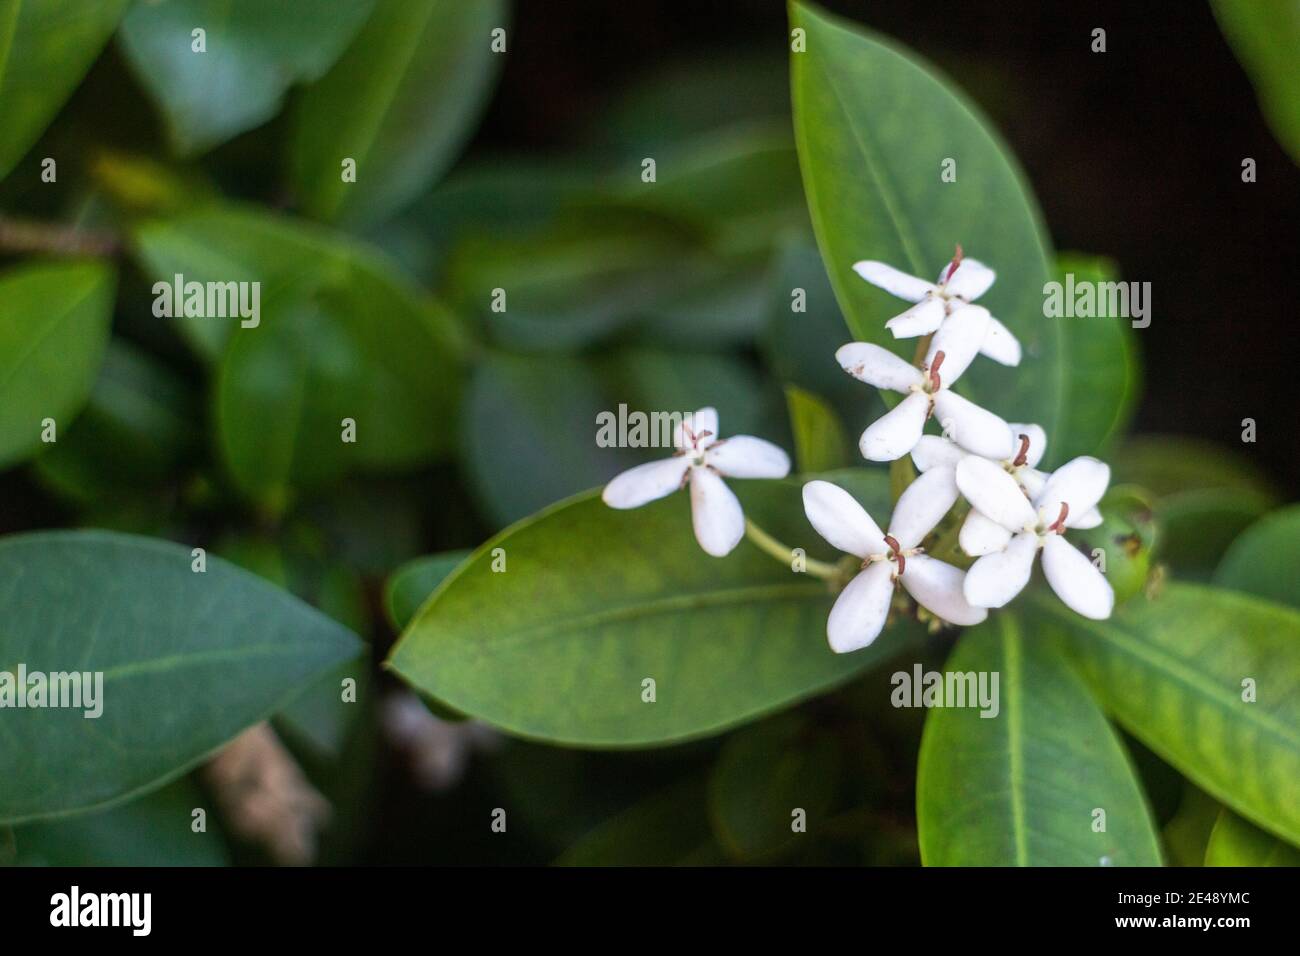 Ixora flowers are popular ornamental plants Stock Photo